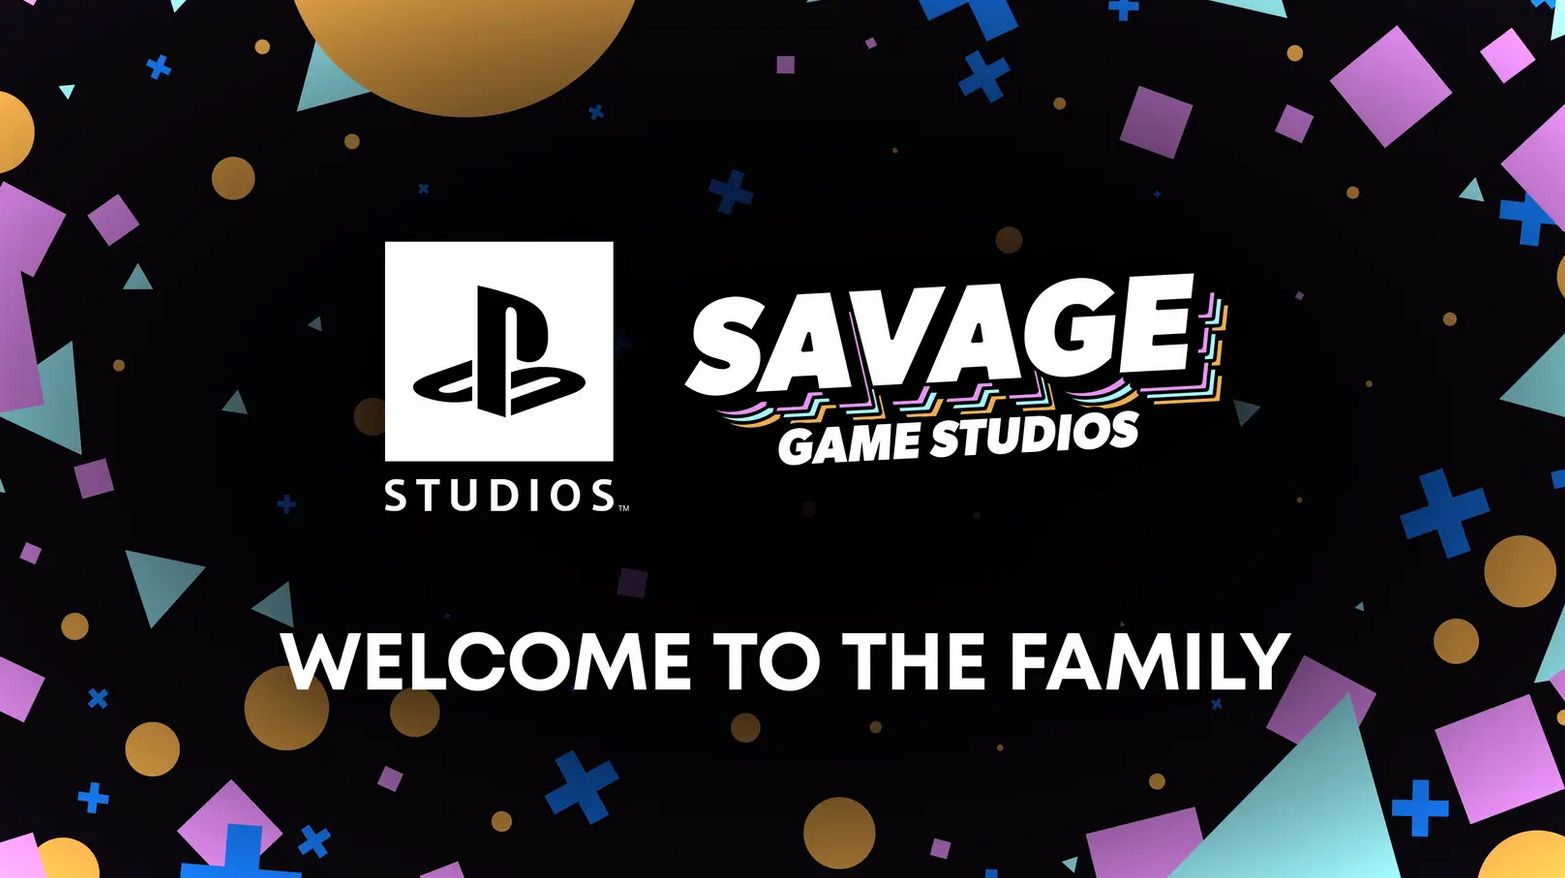 #Neuer Anlauf ins Mobile-Gaming: Sony PlayStation übernimmt Savage Game Studios